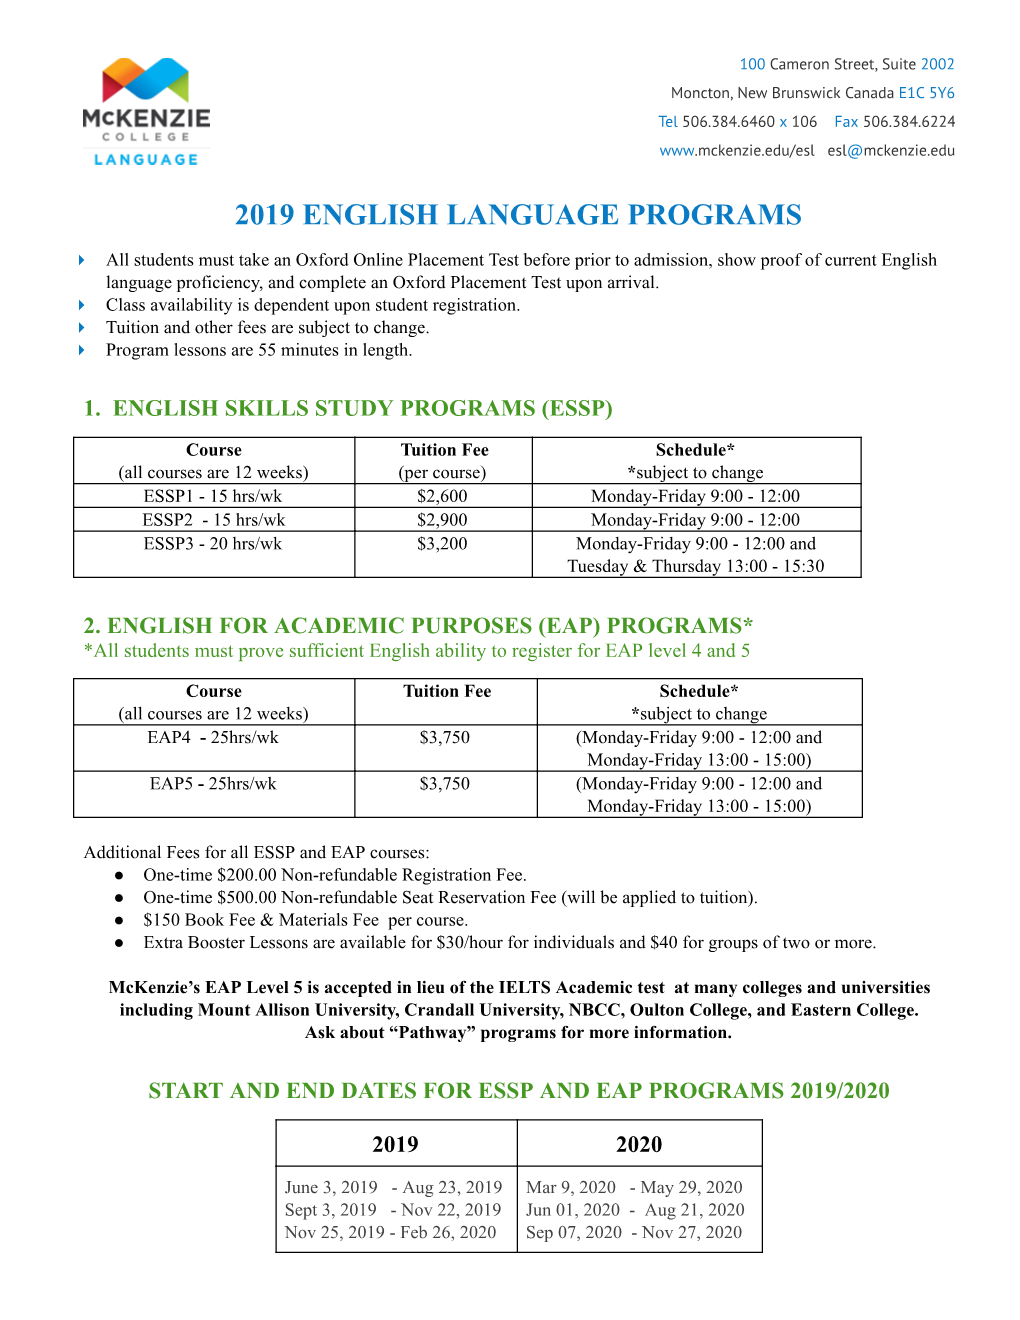 2019 English Language Programs